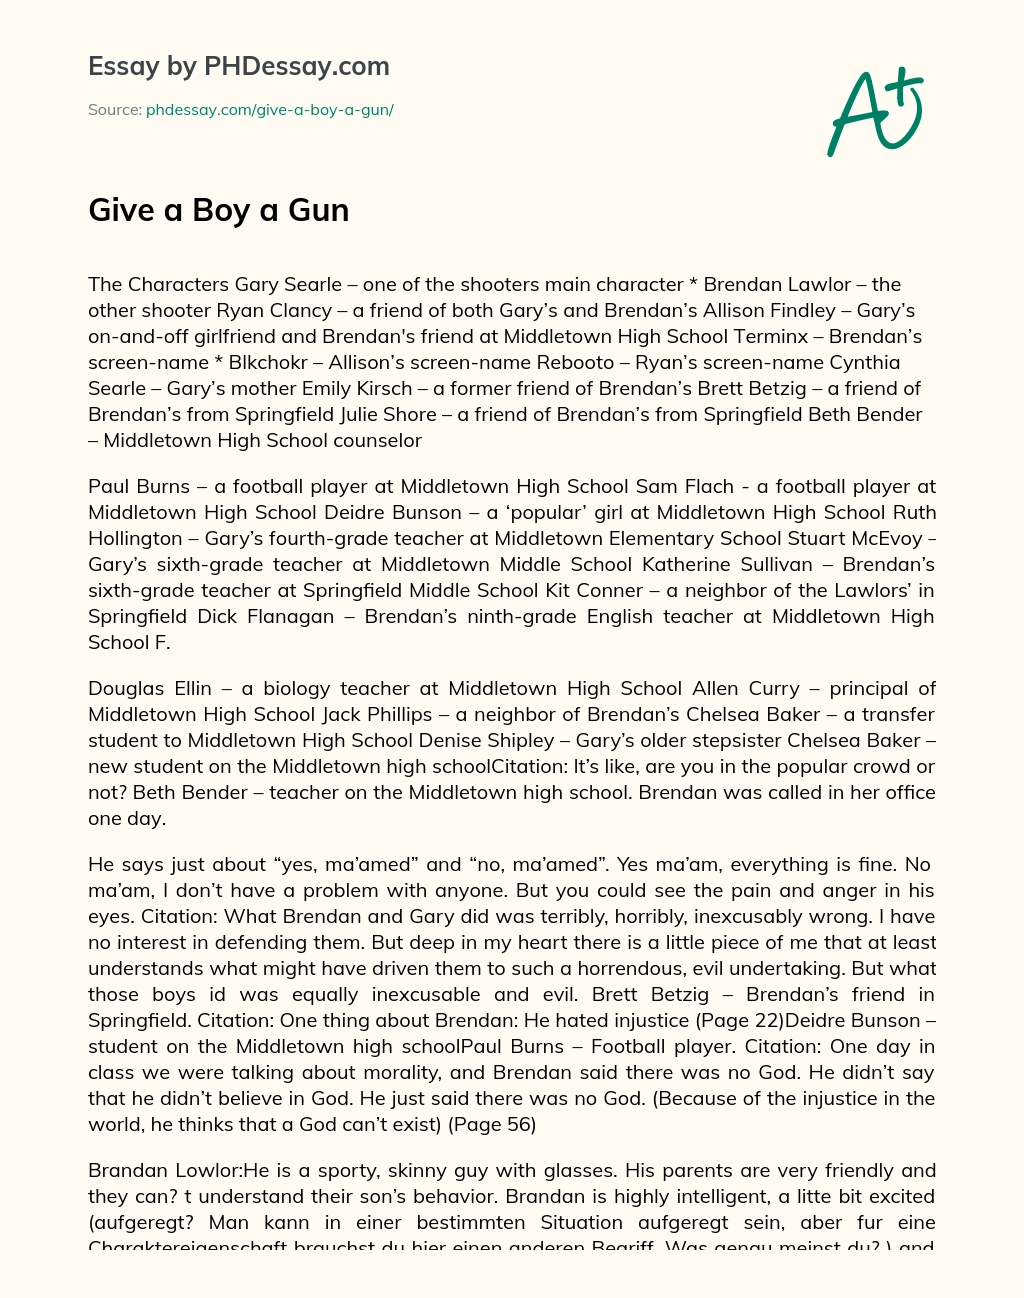 Give a Boy a Gun essay